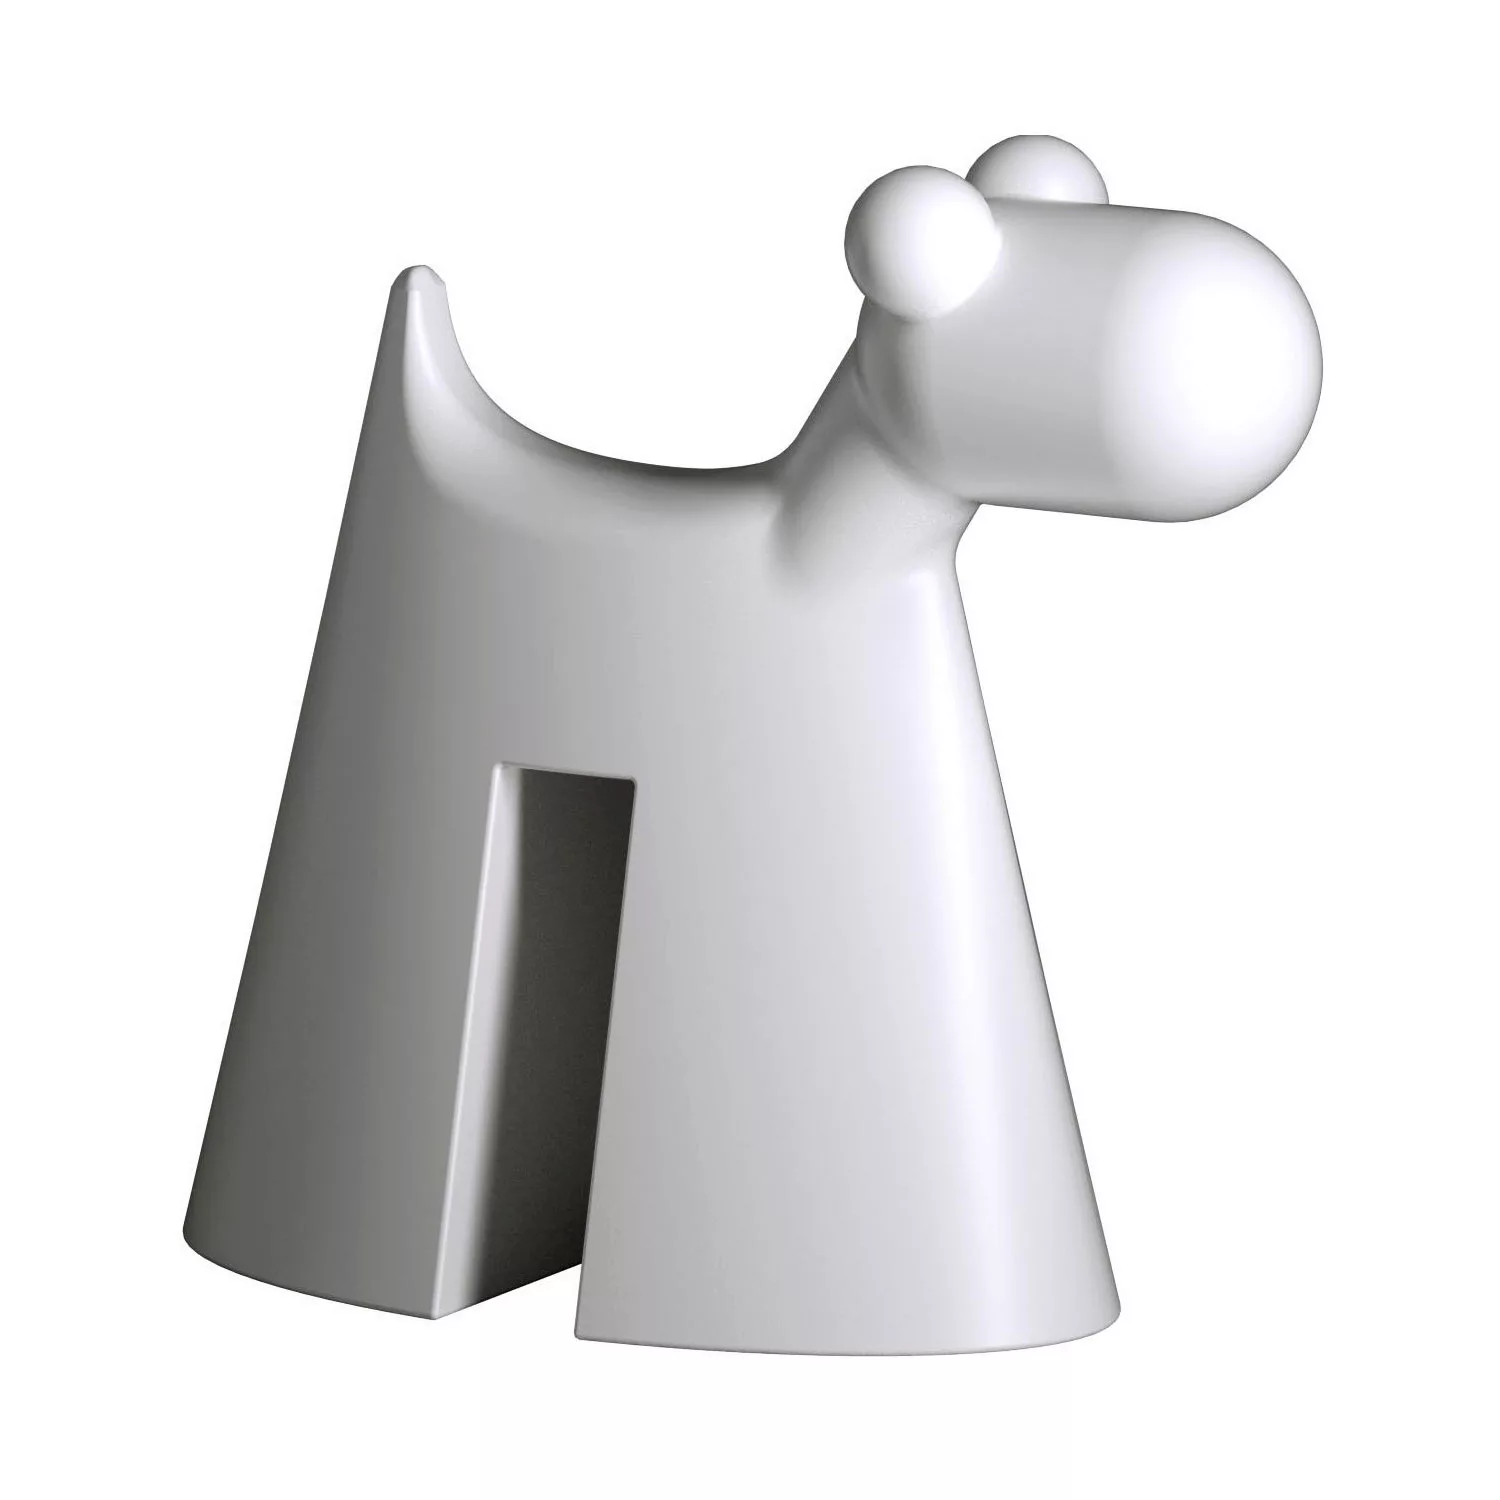 Serralunga - Doggy Kinderstuhl - weiß/matt/BxHxT 27,5x55x60cm günstig online kaufen